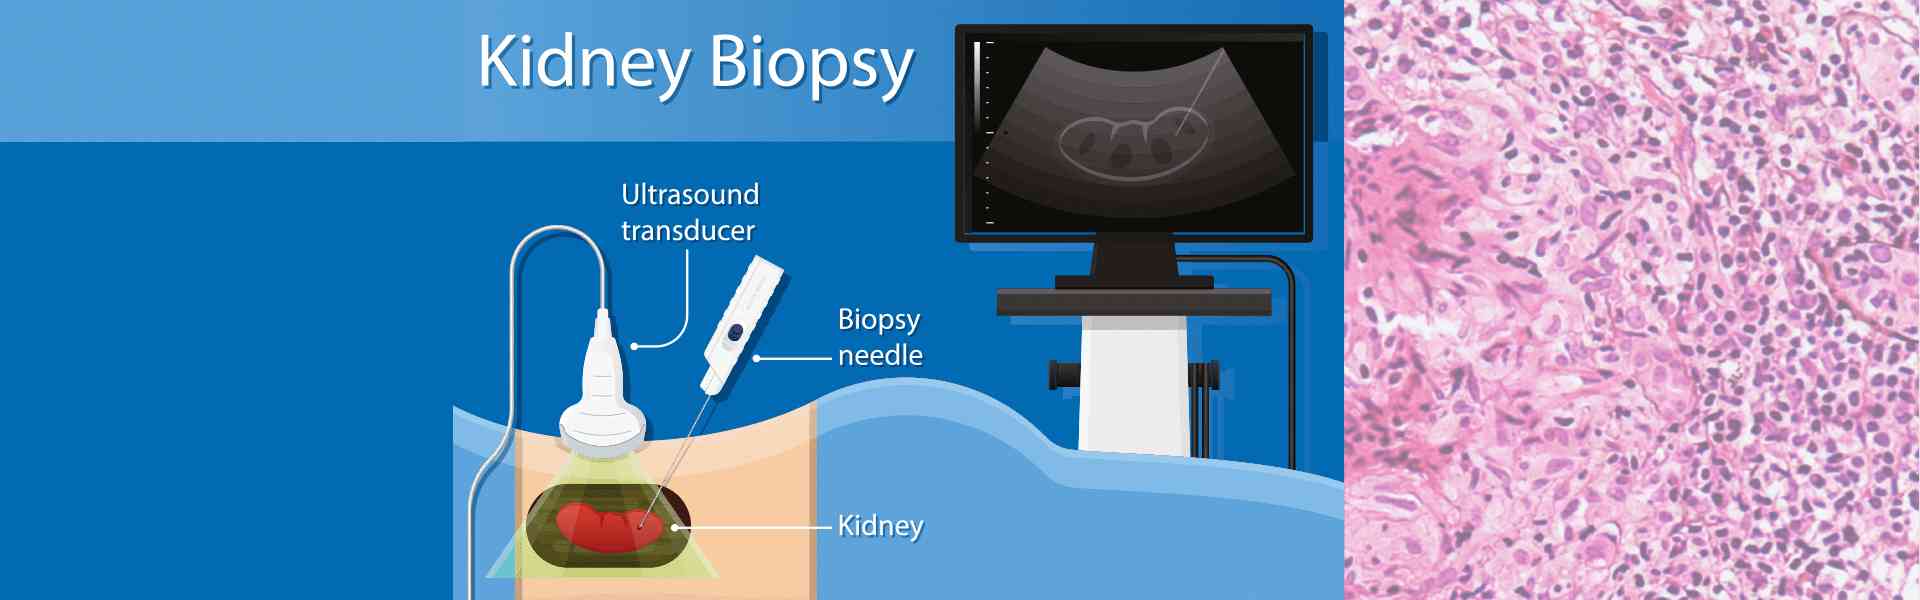 Kidney Biopsy Treatment in hebbal